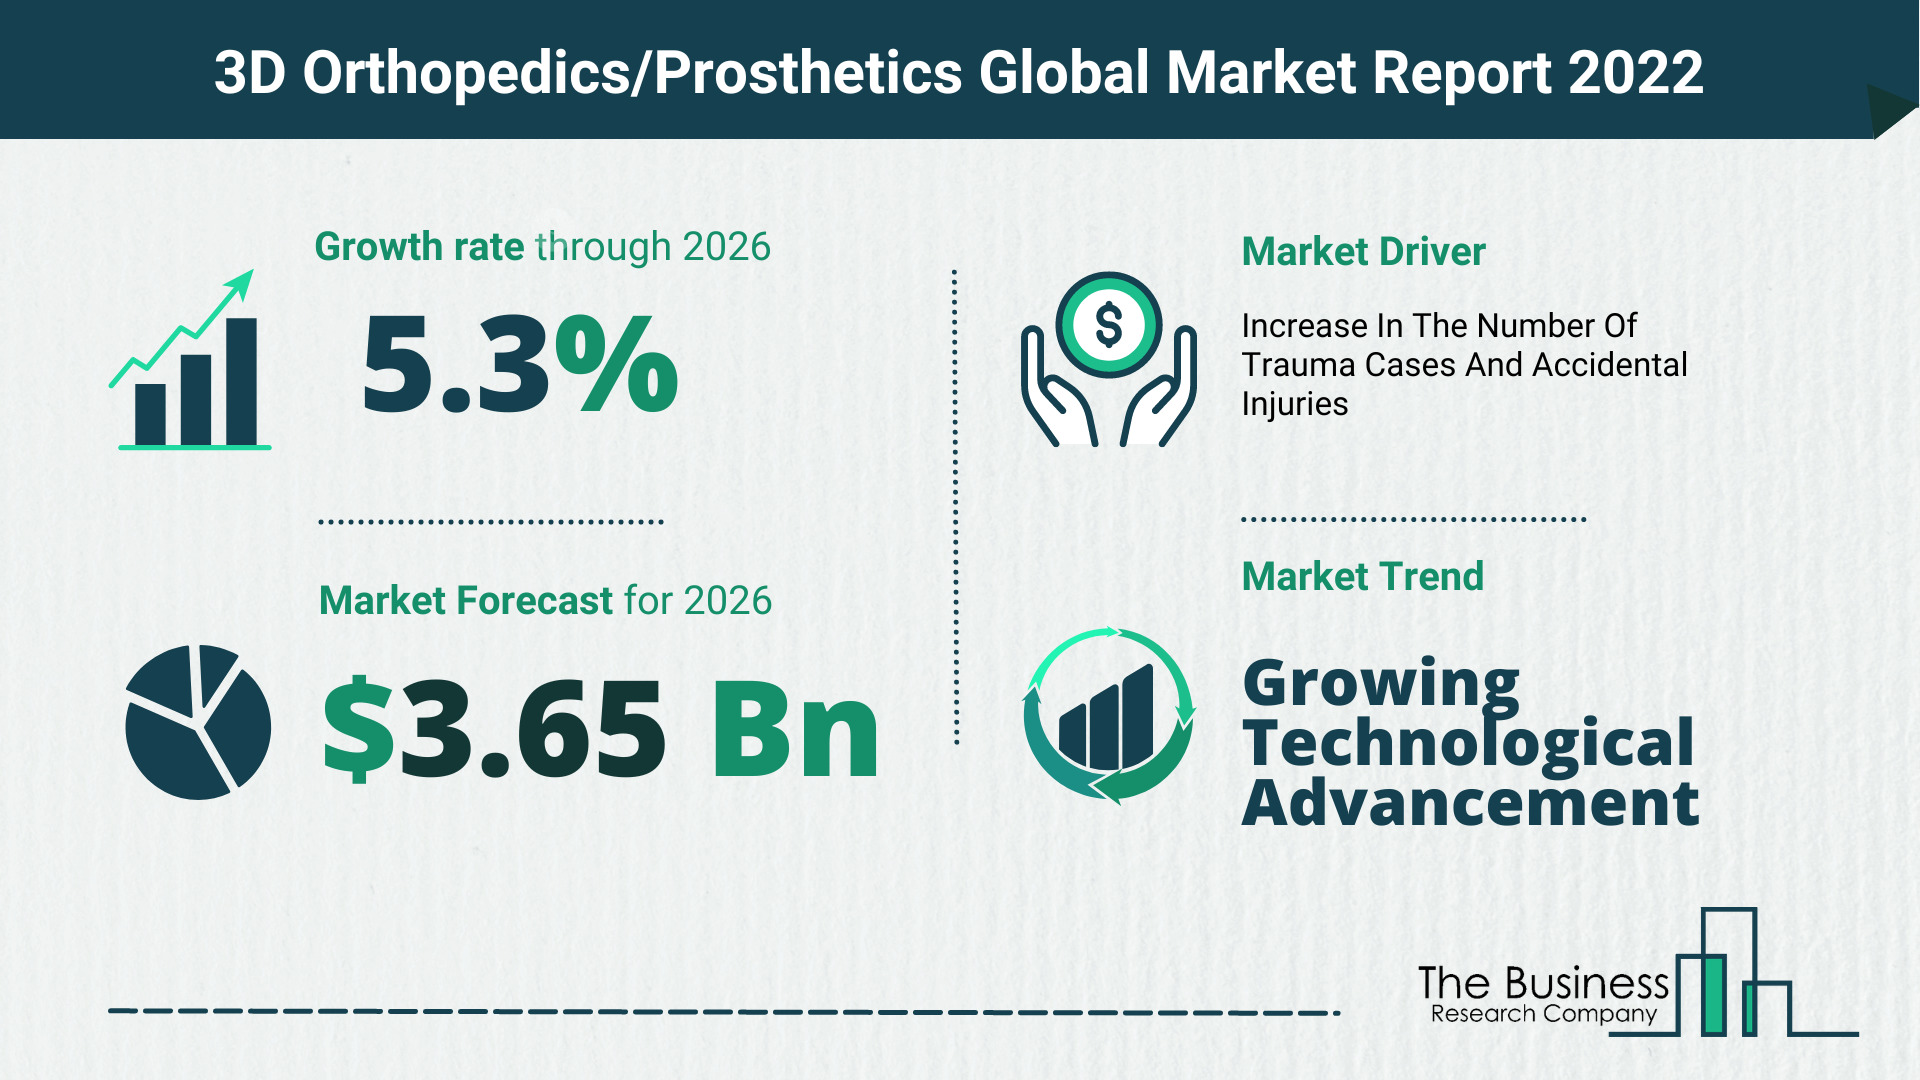 The 3D Orthopedics/Prosthetics Market Share, Market Size, And Growth Rate 2022